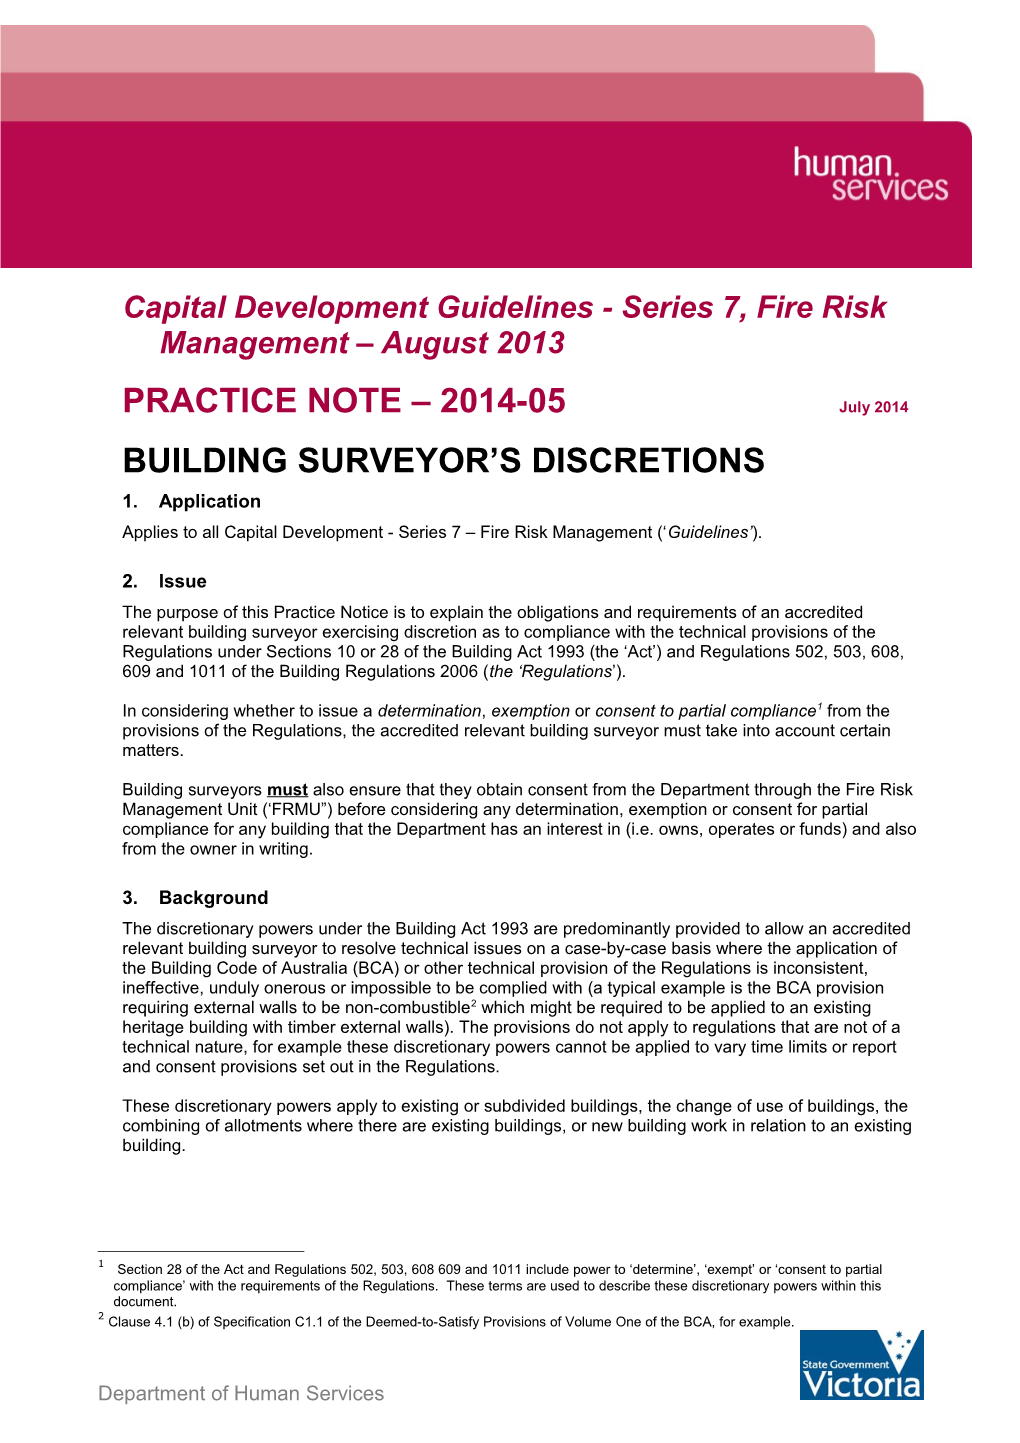 Practice Note 2014-05-Building Surveyors Discretion